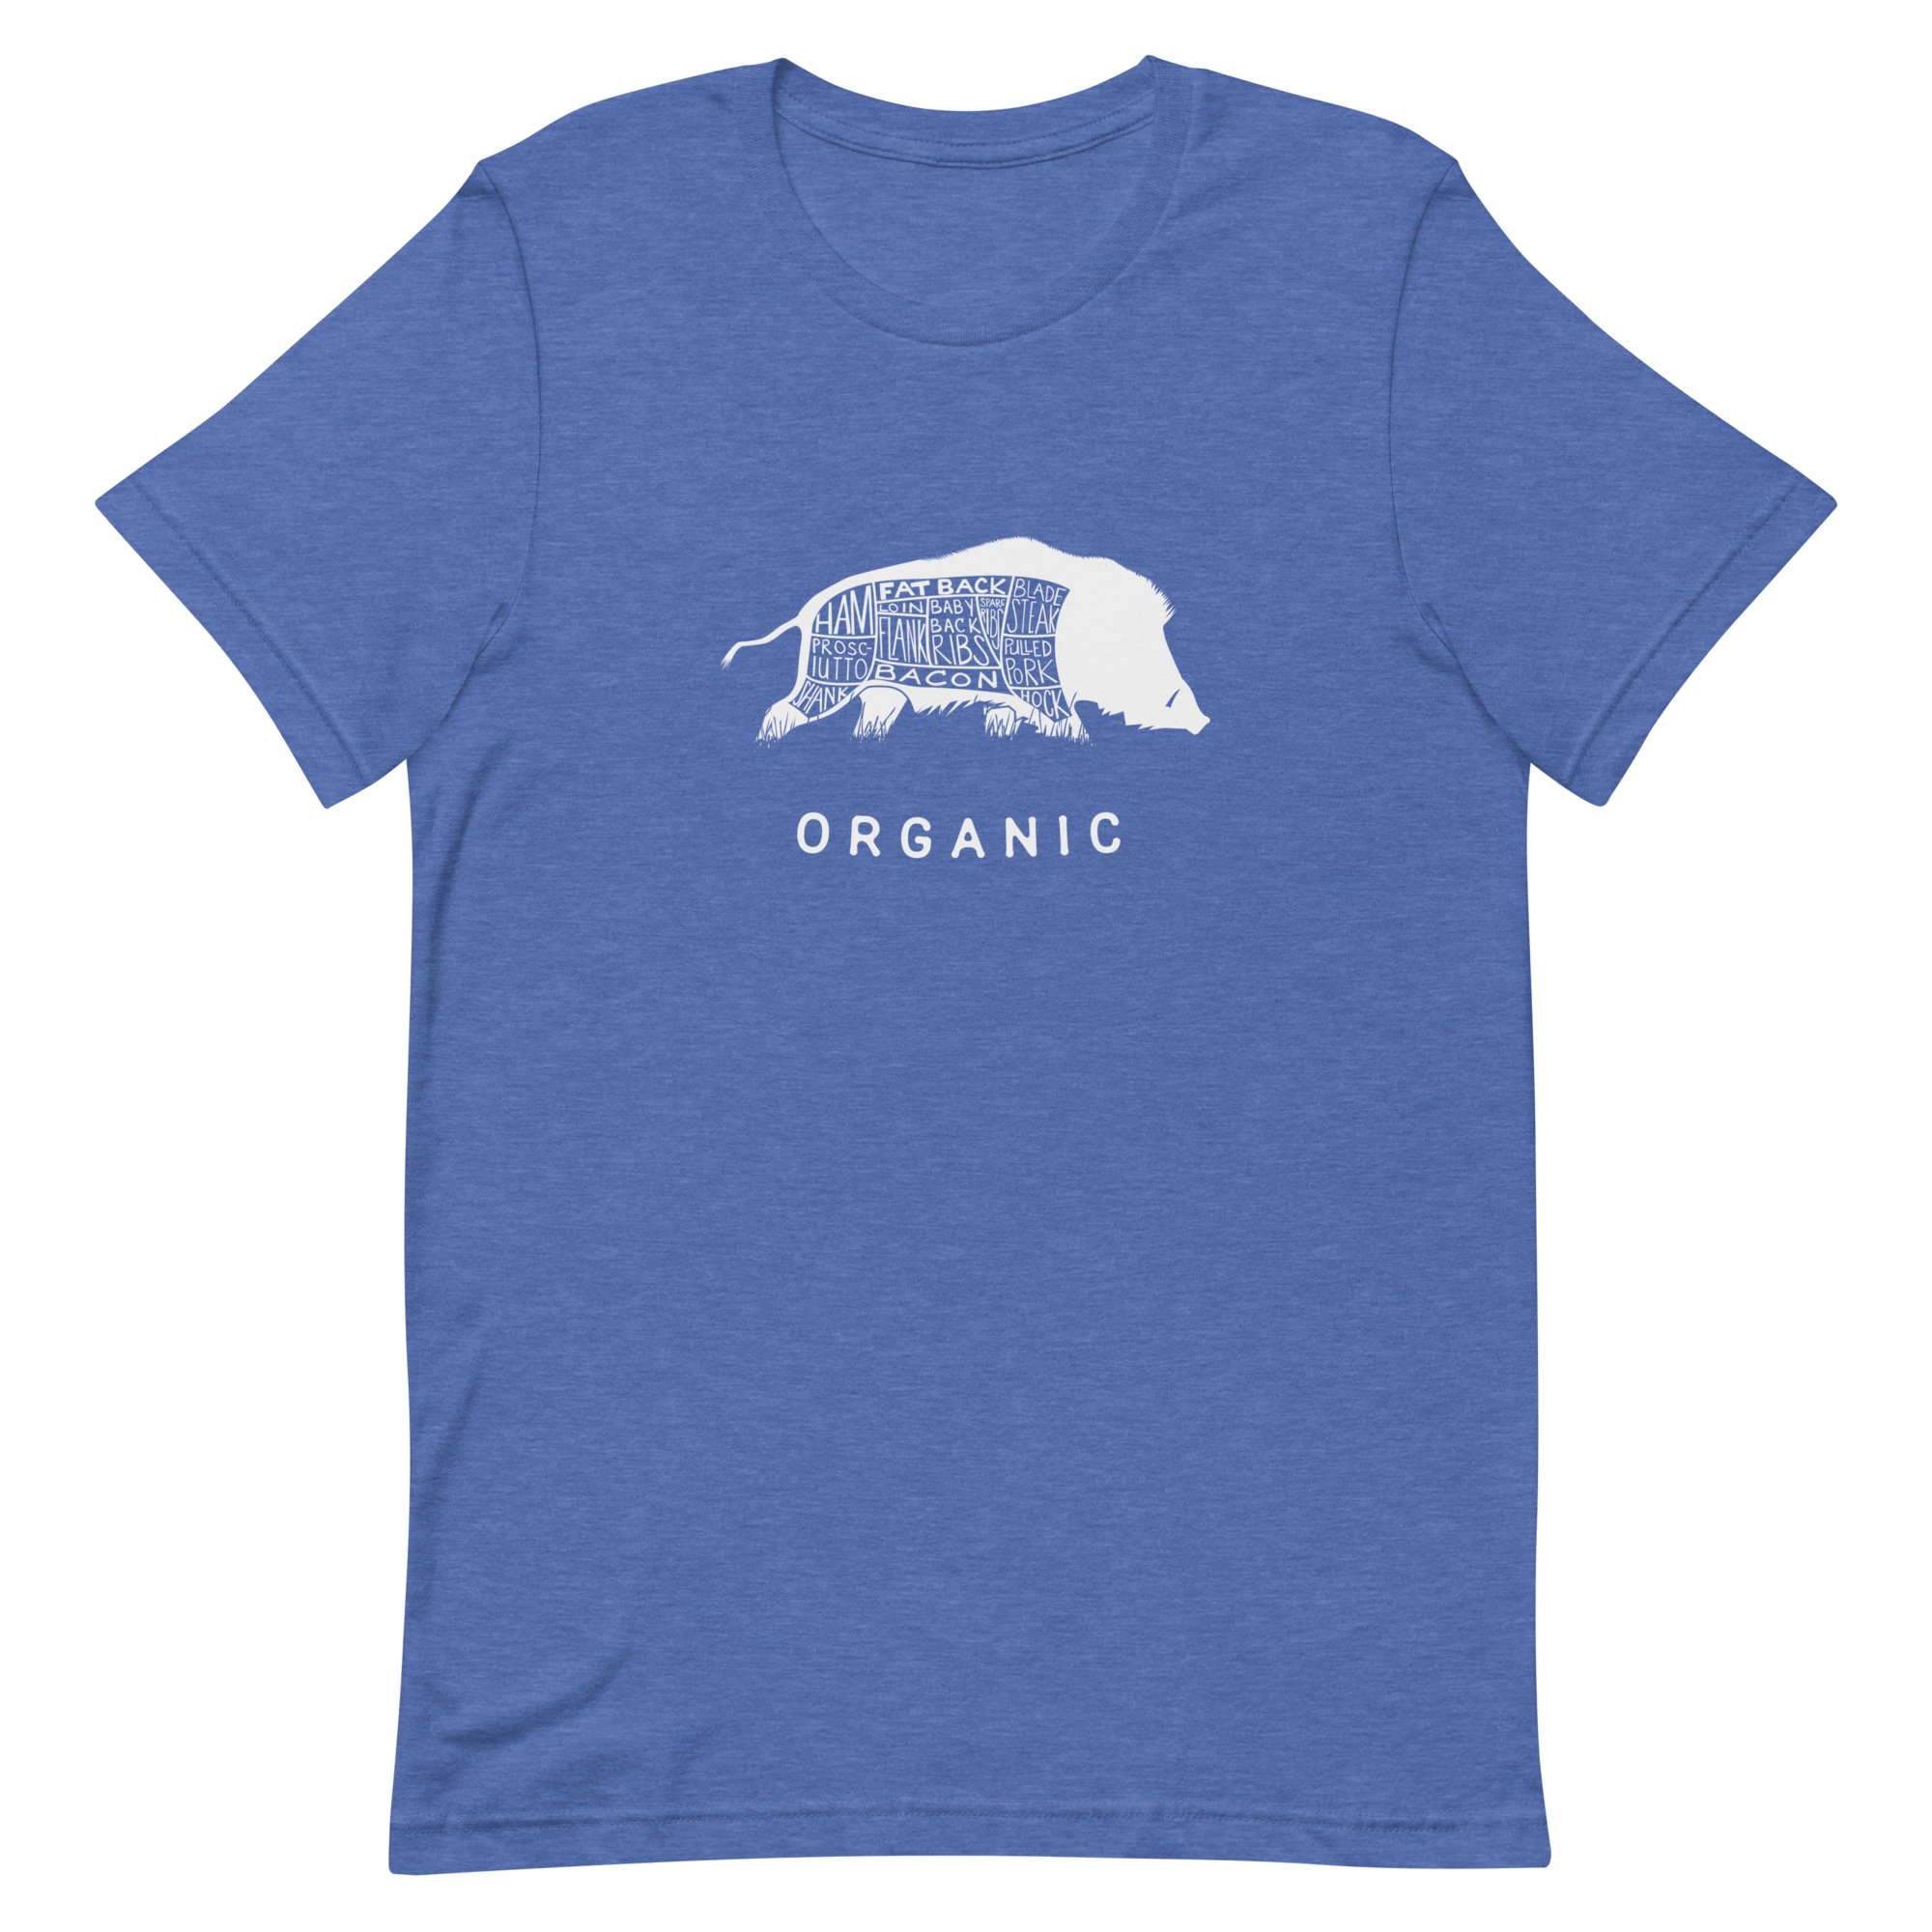 Organic Hog T-Shirt